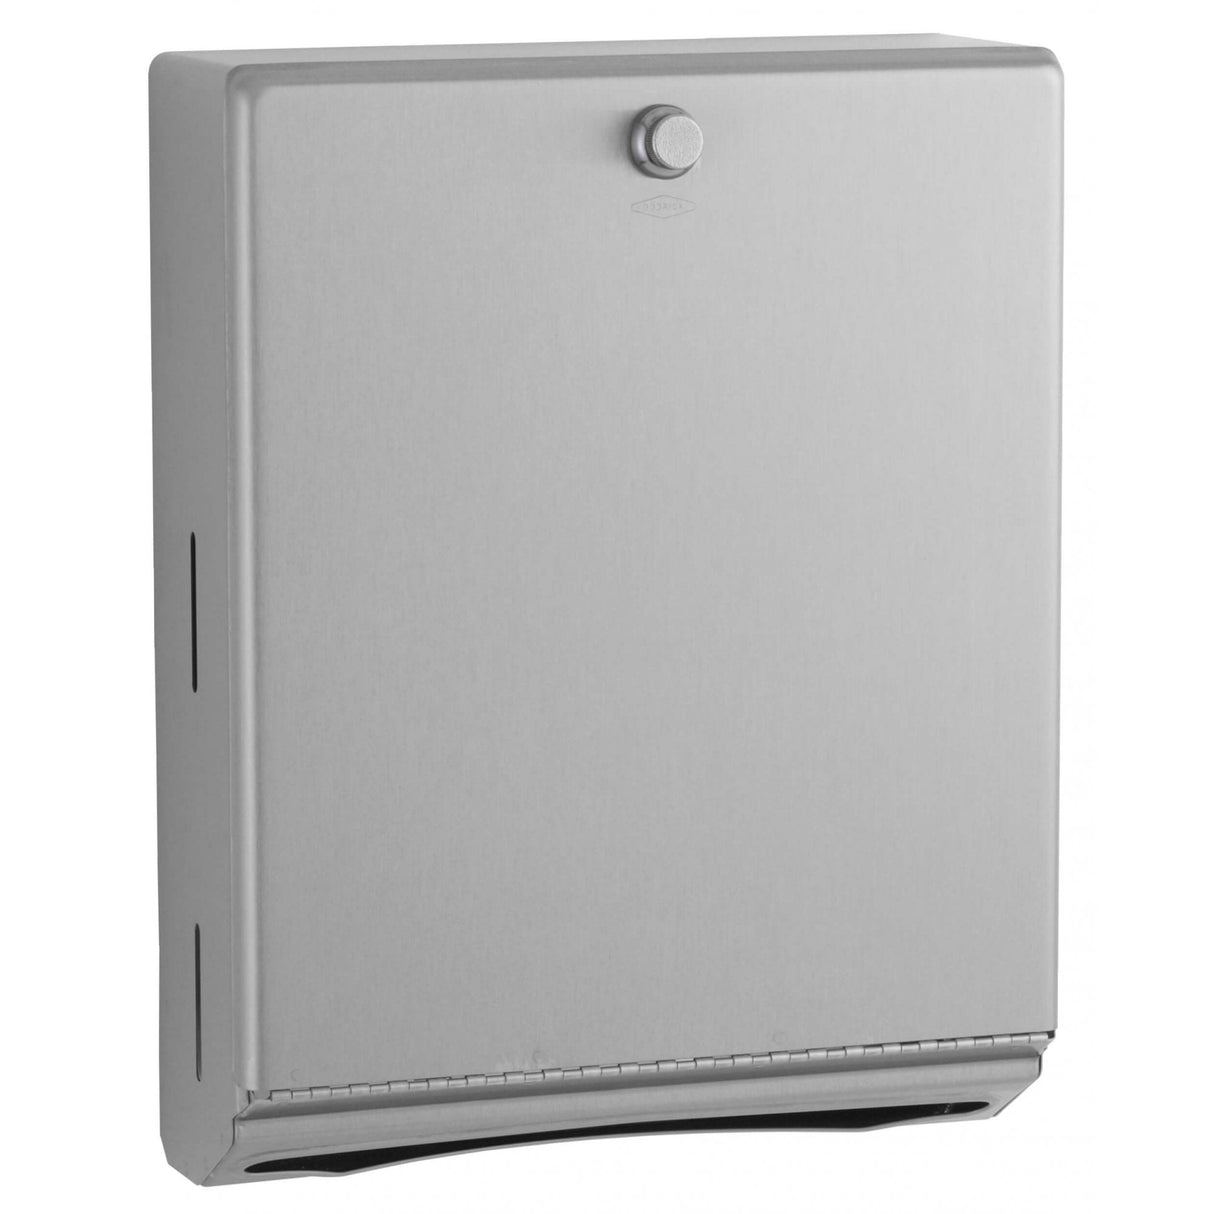 B-2620 ClassicSeries® Paper Towel Dispenser with Knob-Latch